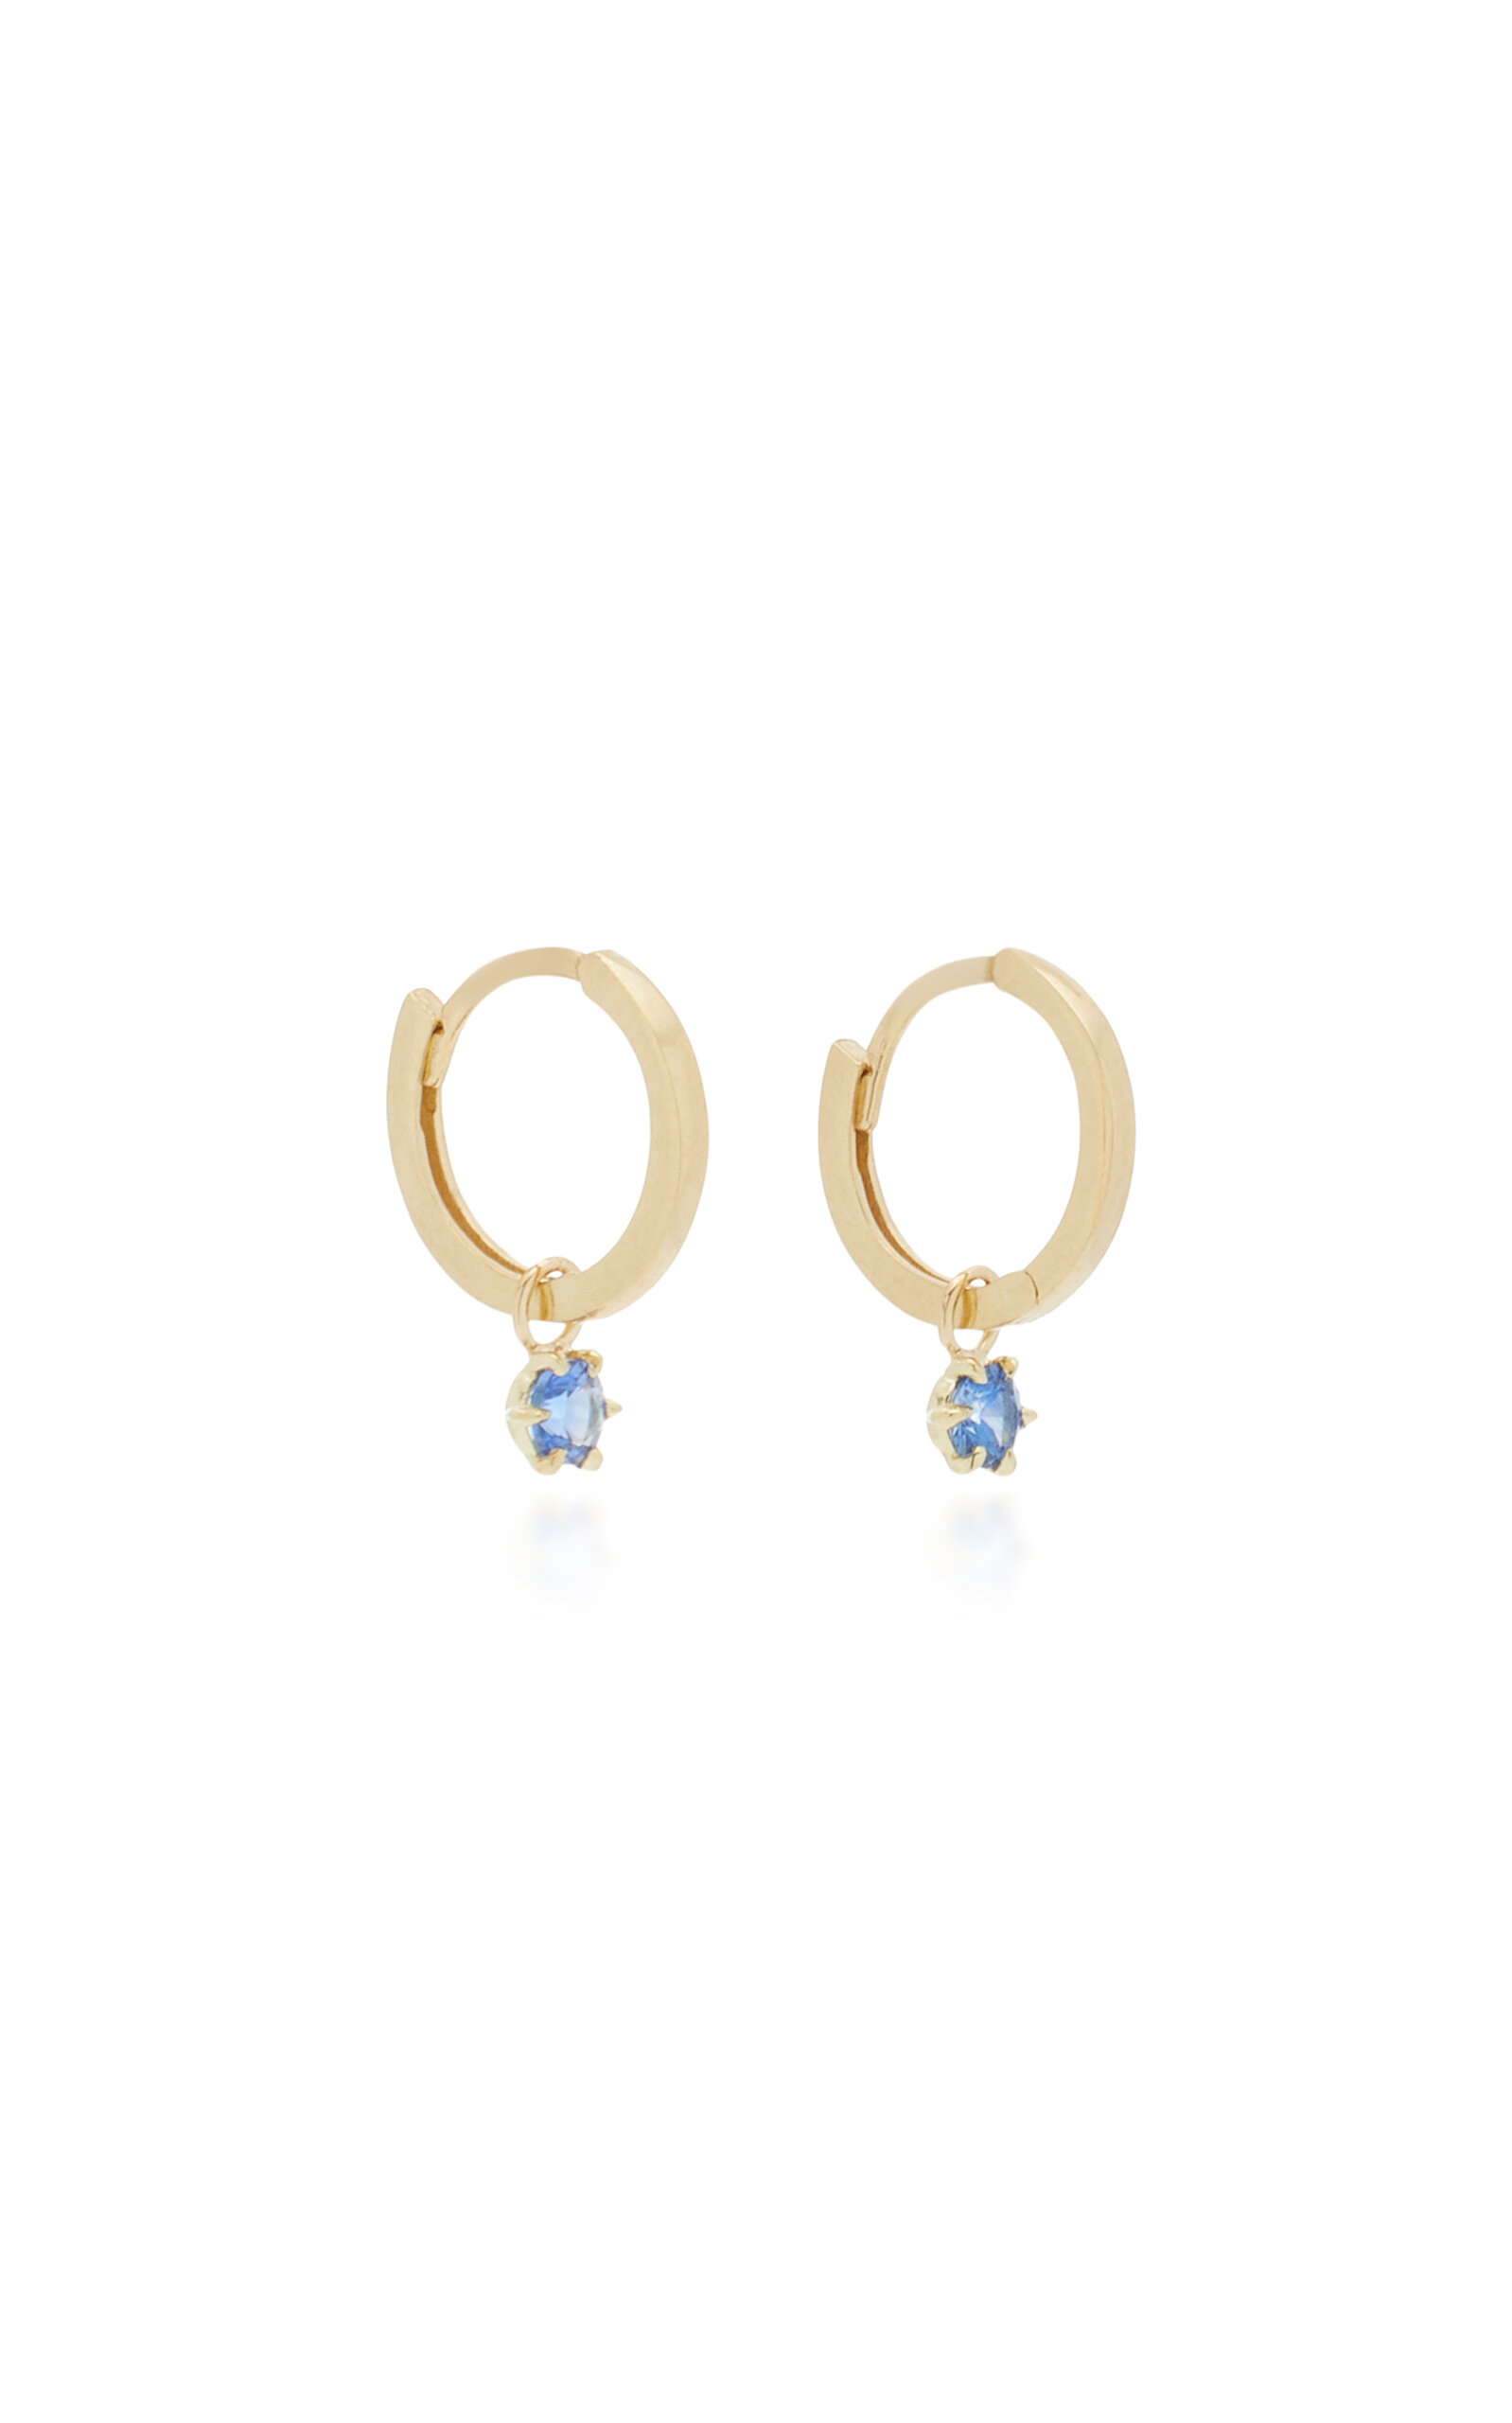 Gideon 14K Yellow Gold Sapphire Hoop Earrings